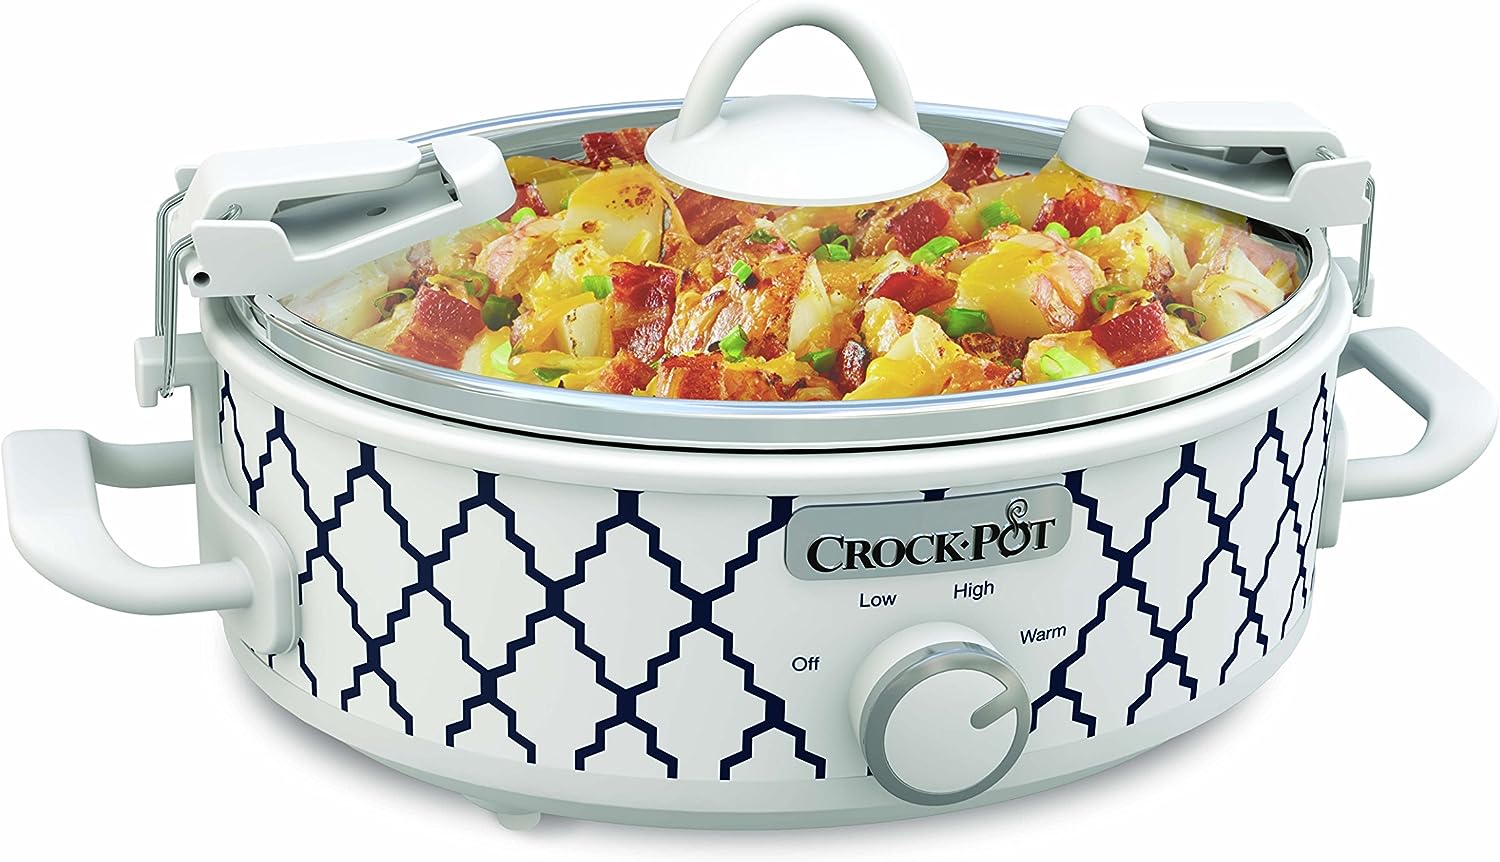 Crock-Pot Slow Cooker review